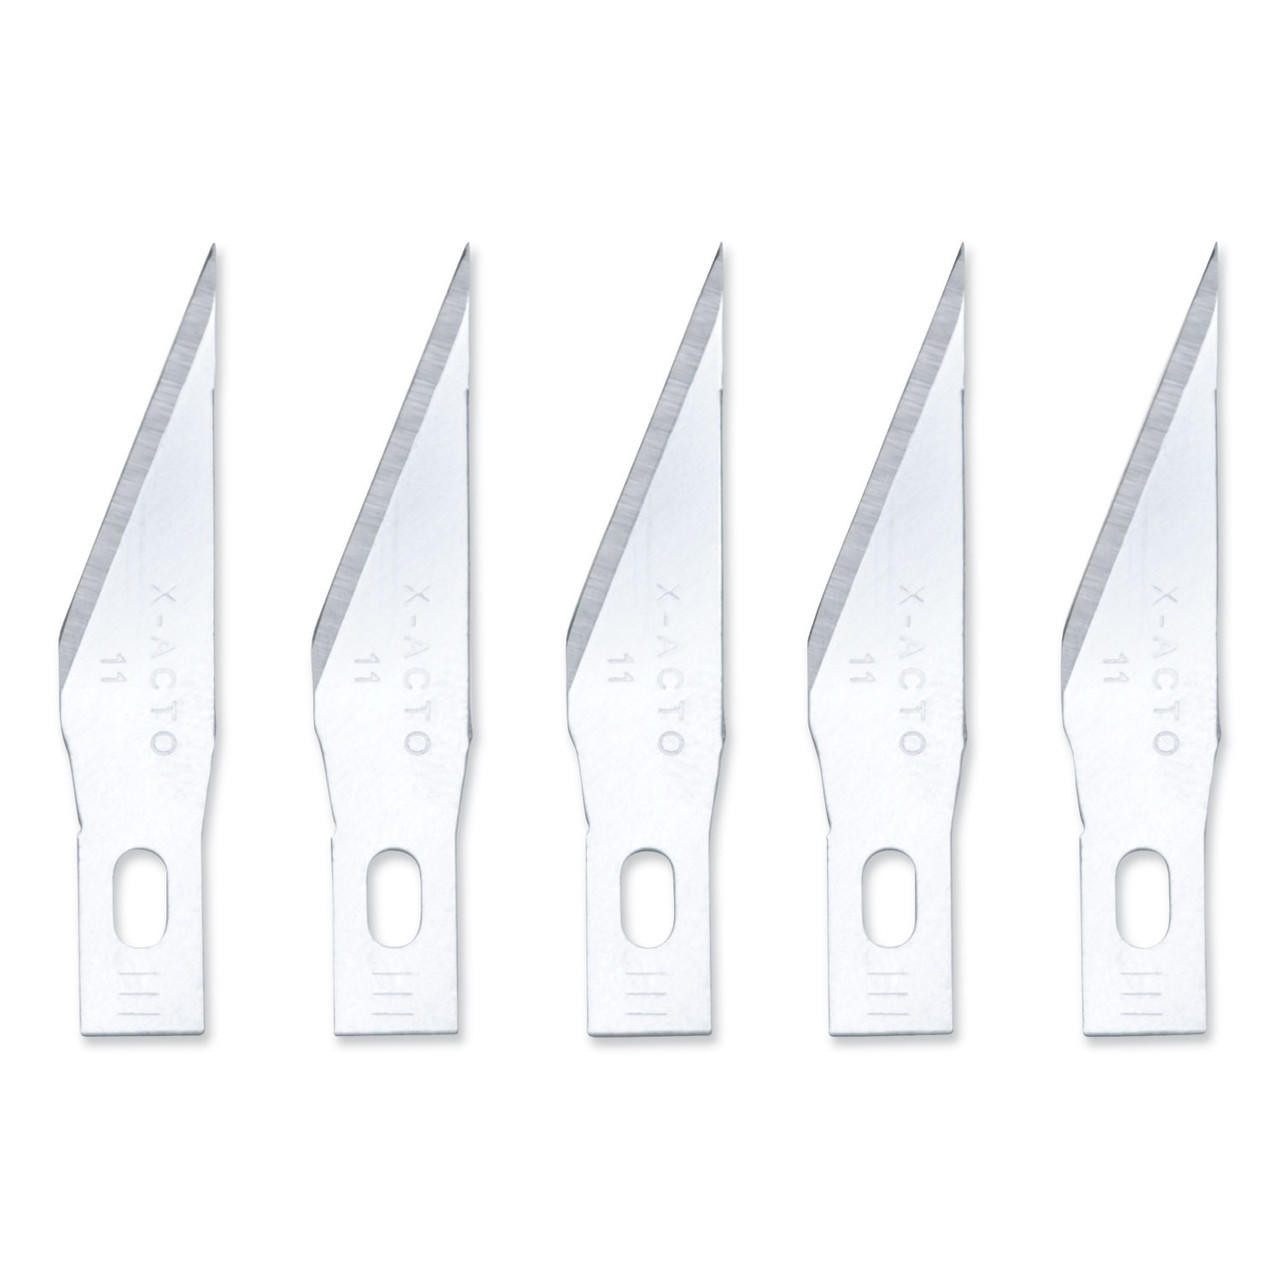 Xacto Blades - Z Series - #11 Blades - 5pk - Sam Flax Atlanta